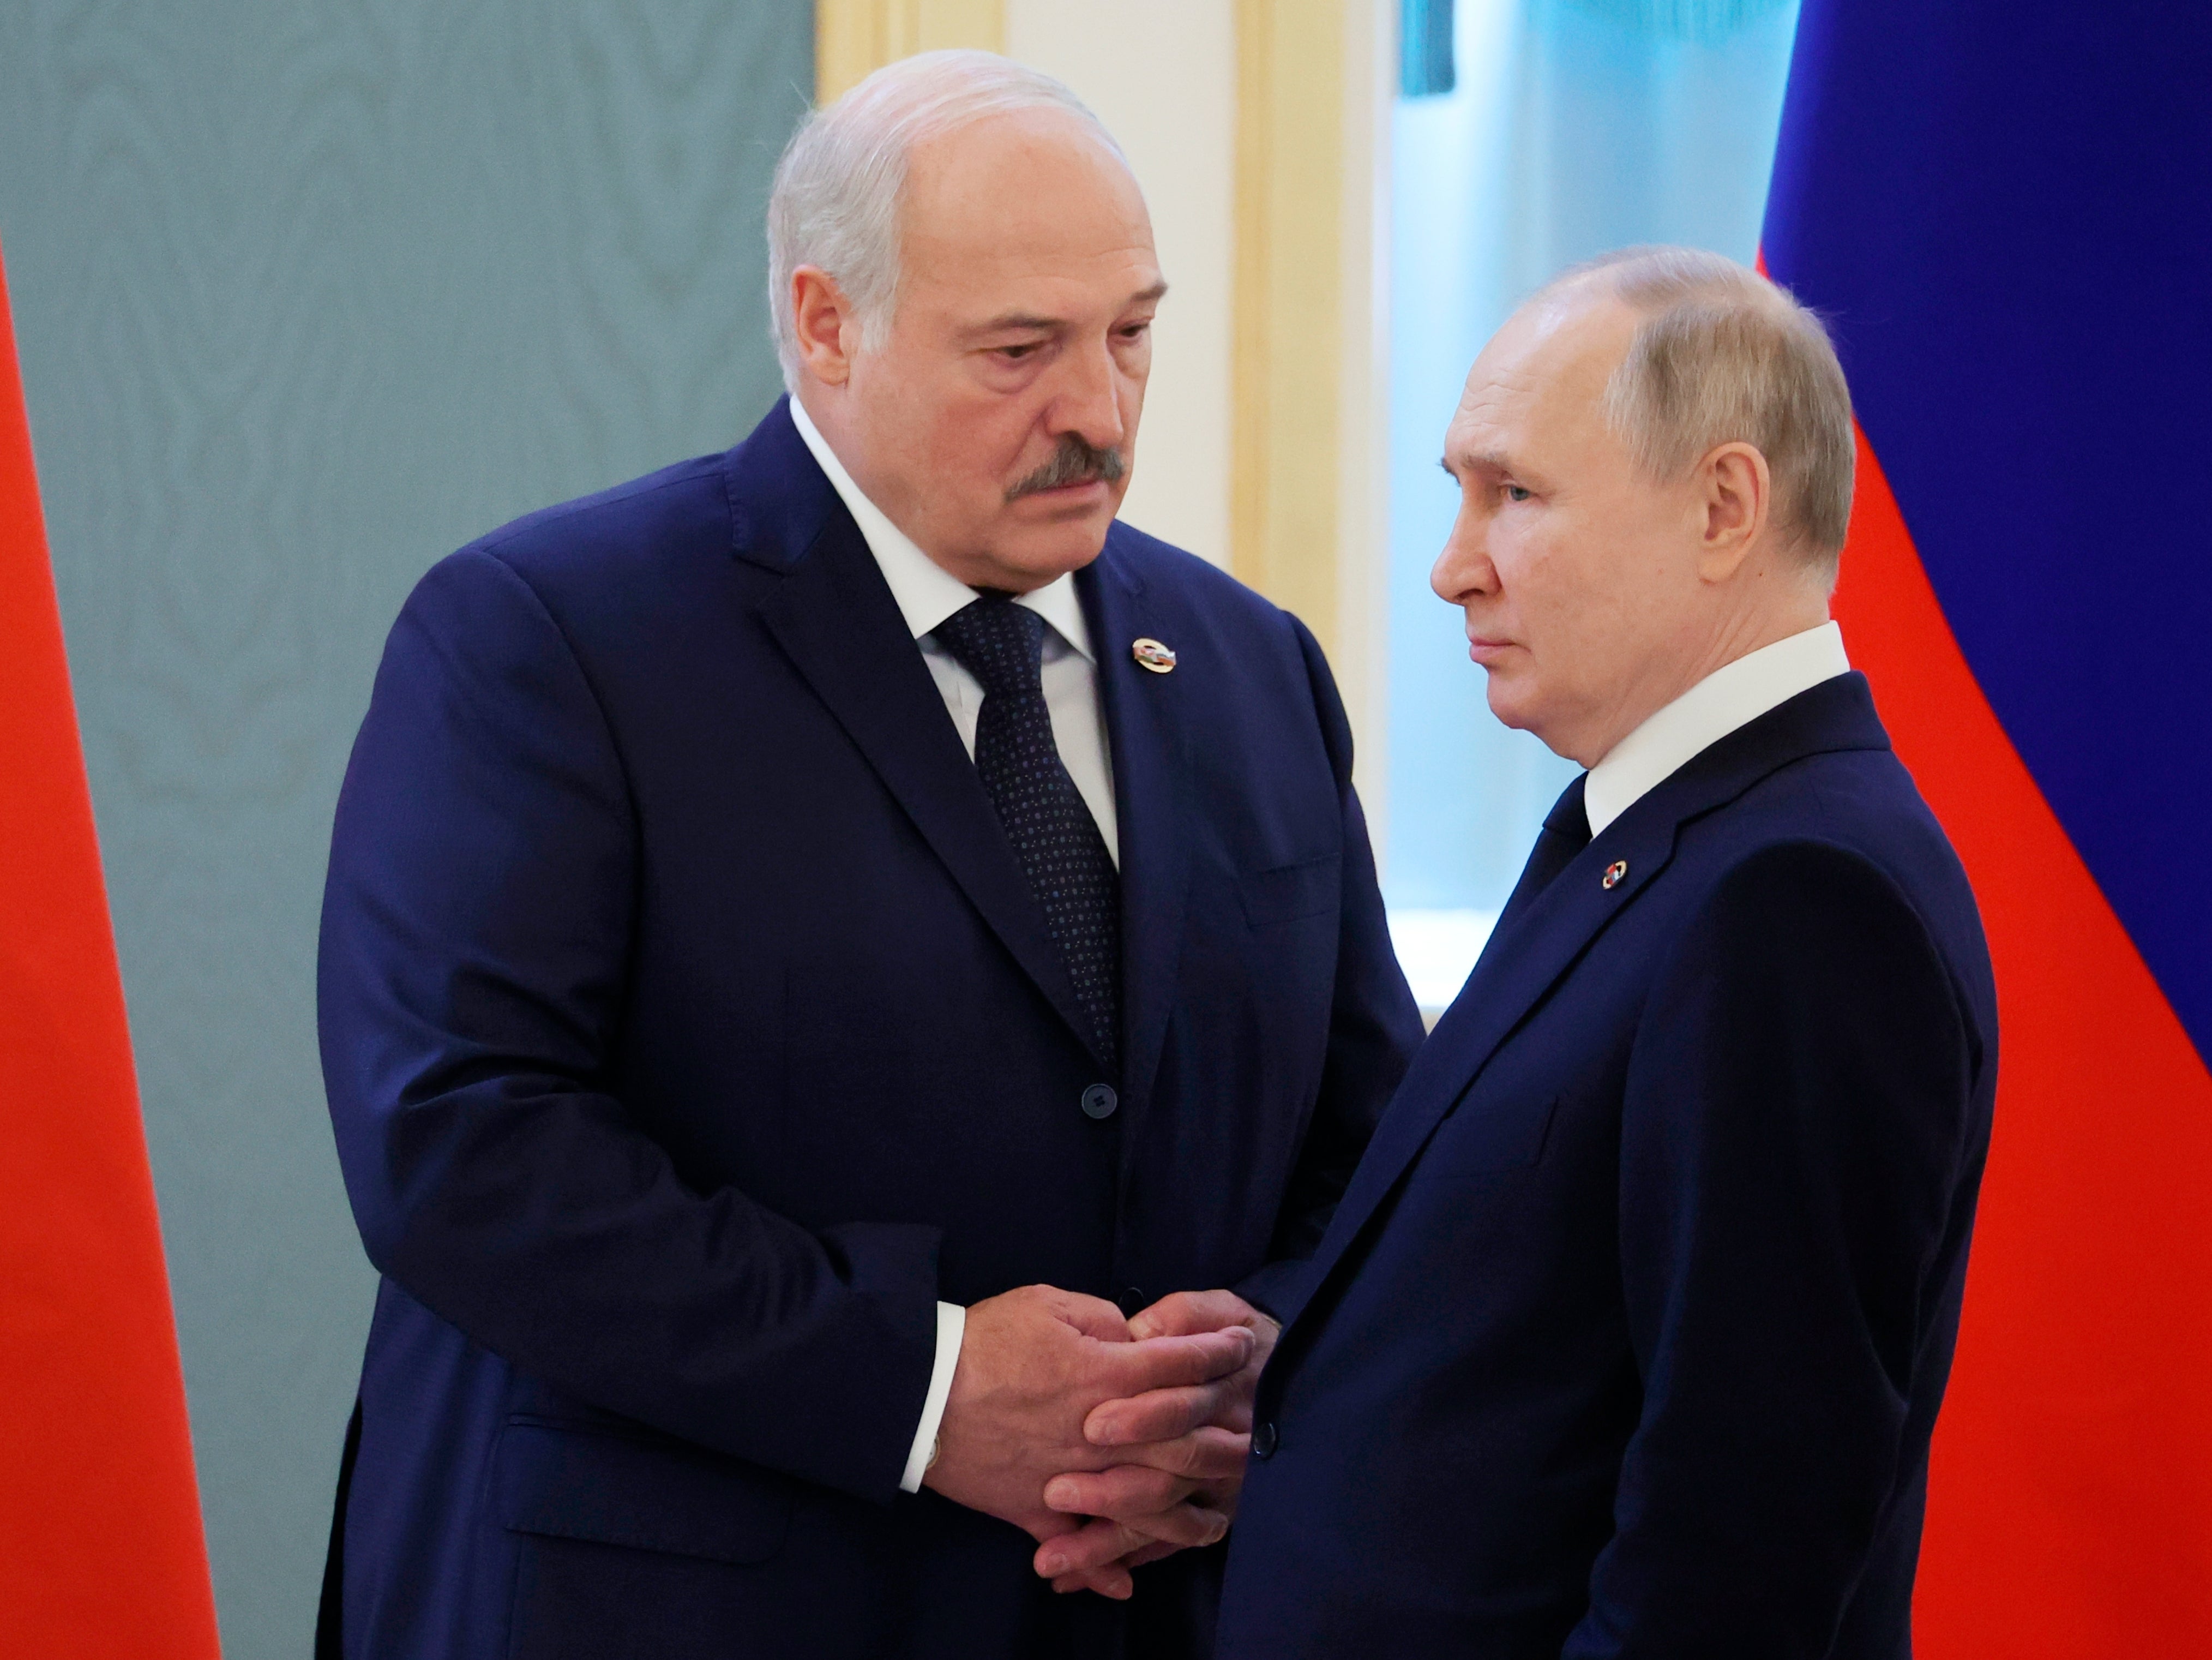 Alexander Lukashenko is a close ally of Vladimir Putin